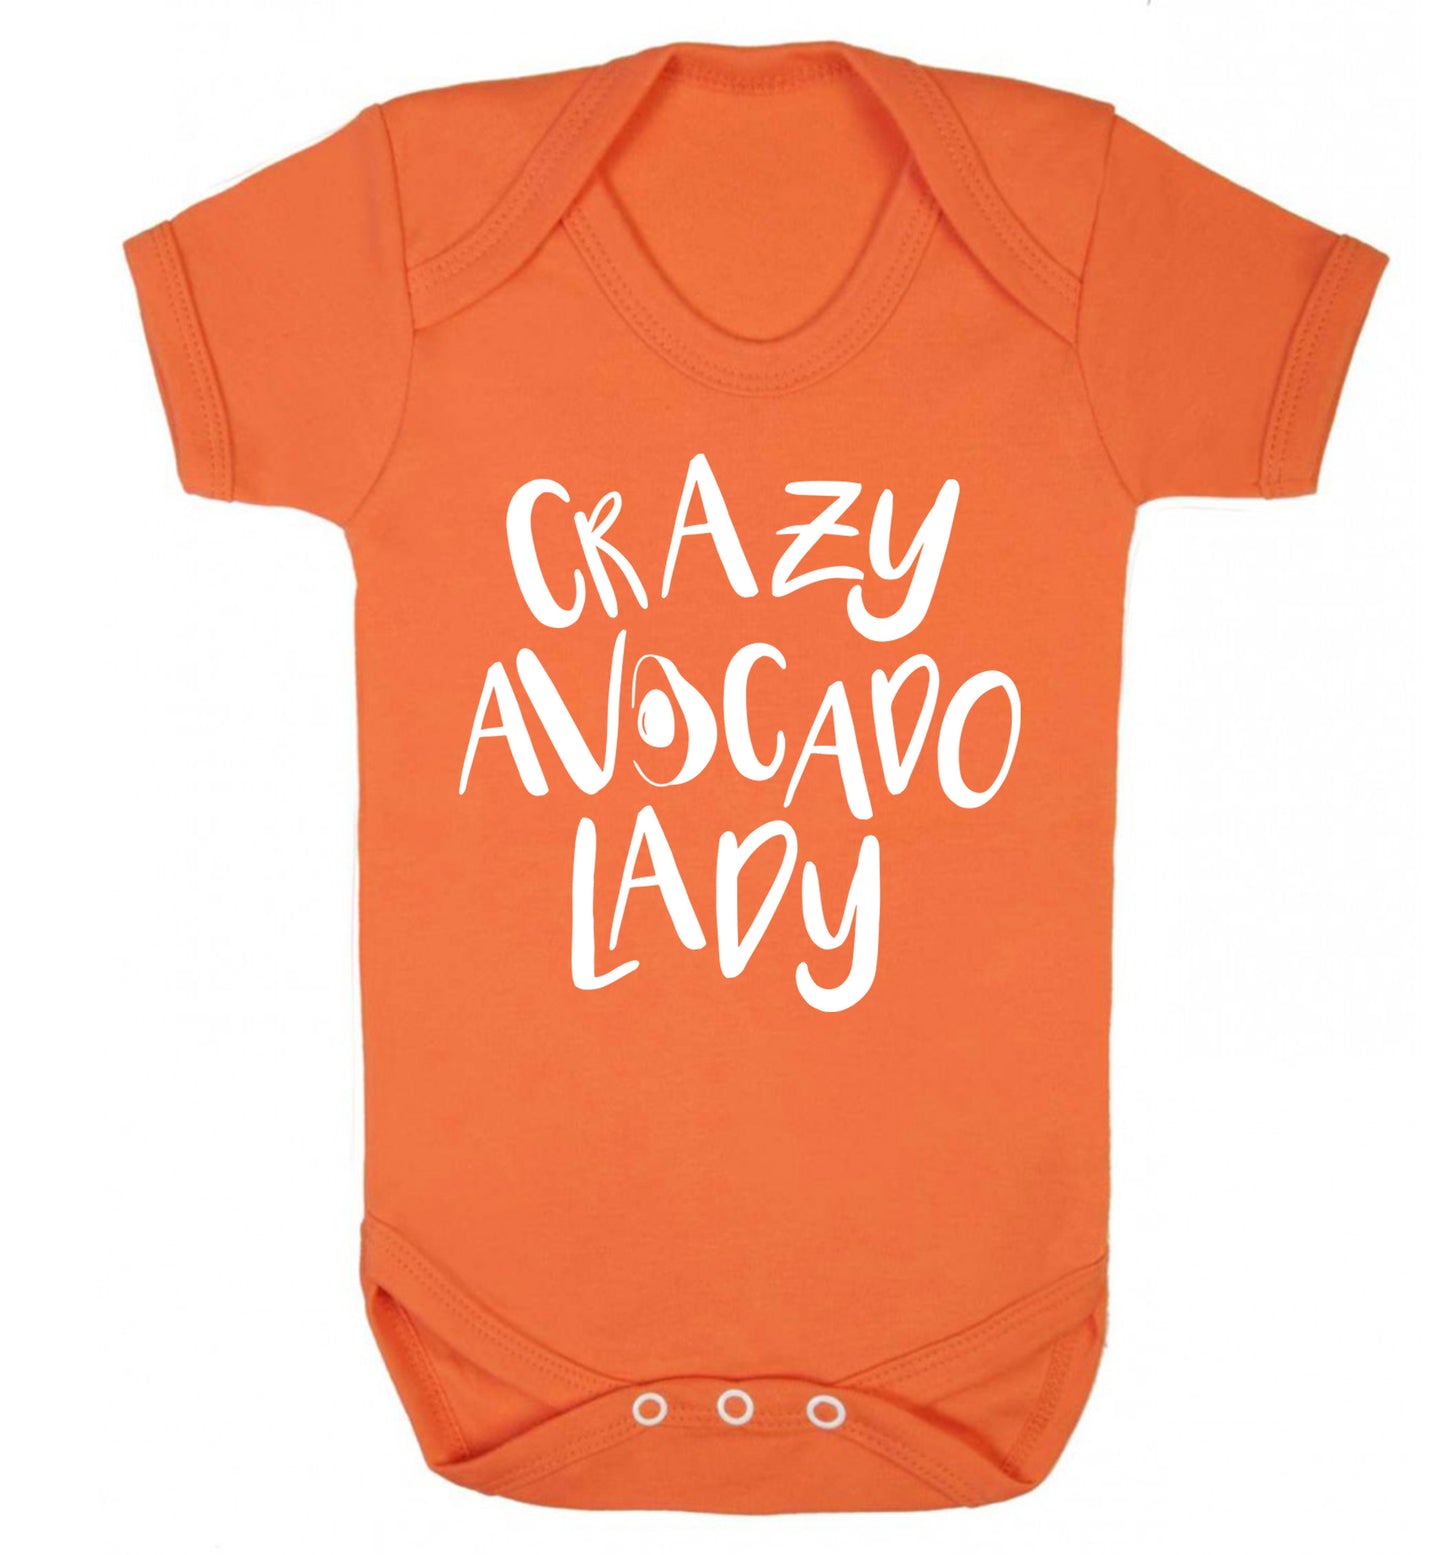 Crazy avocado lady Baby Vest orange 18-24 months